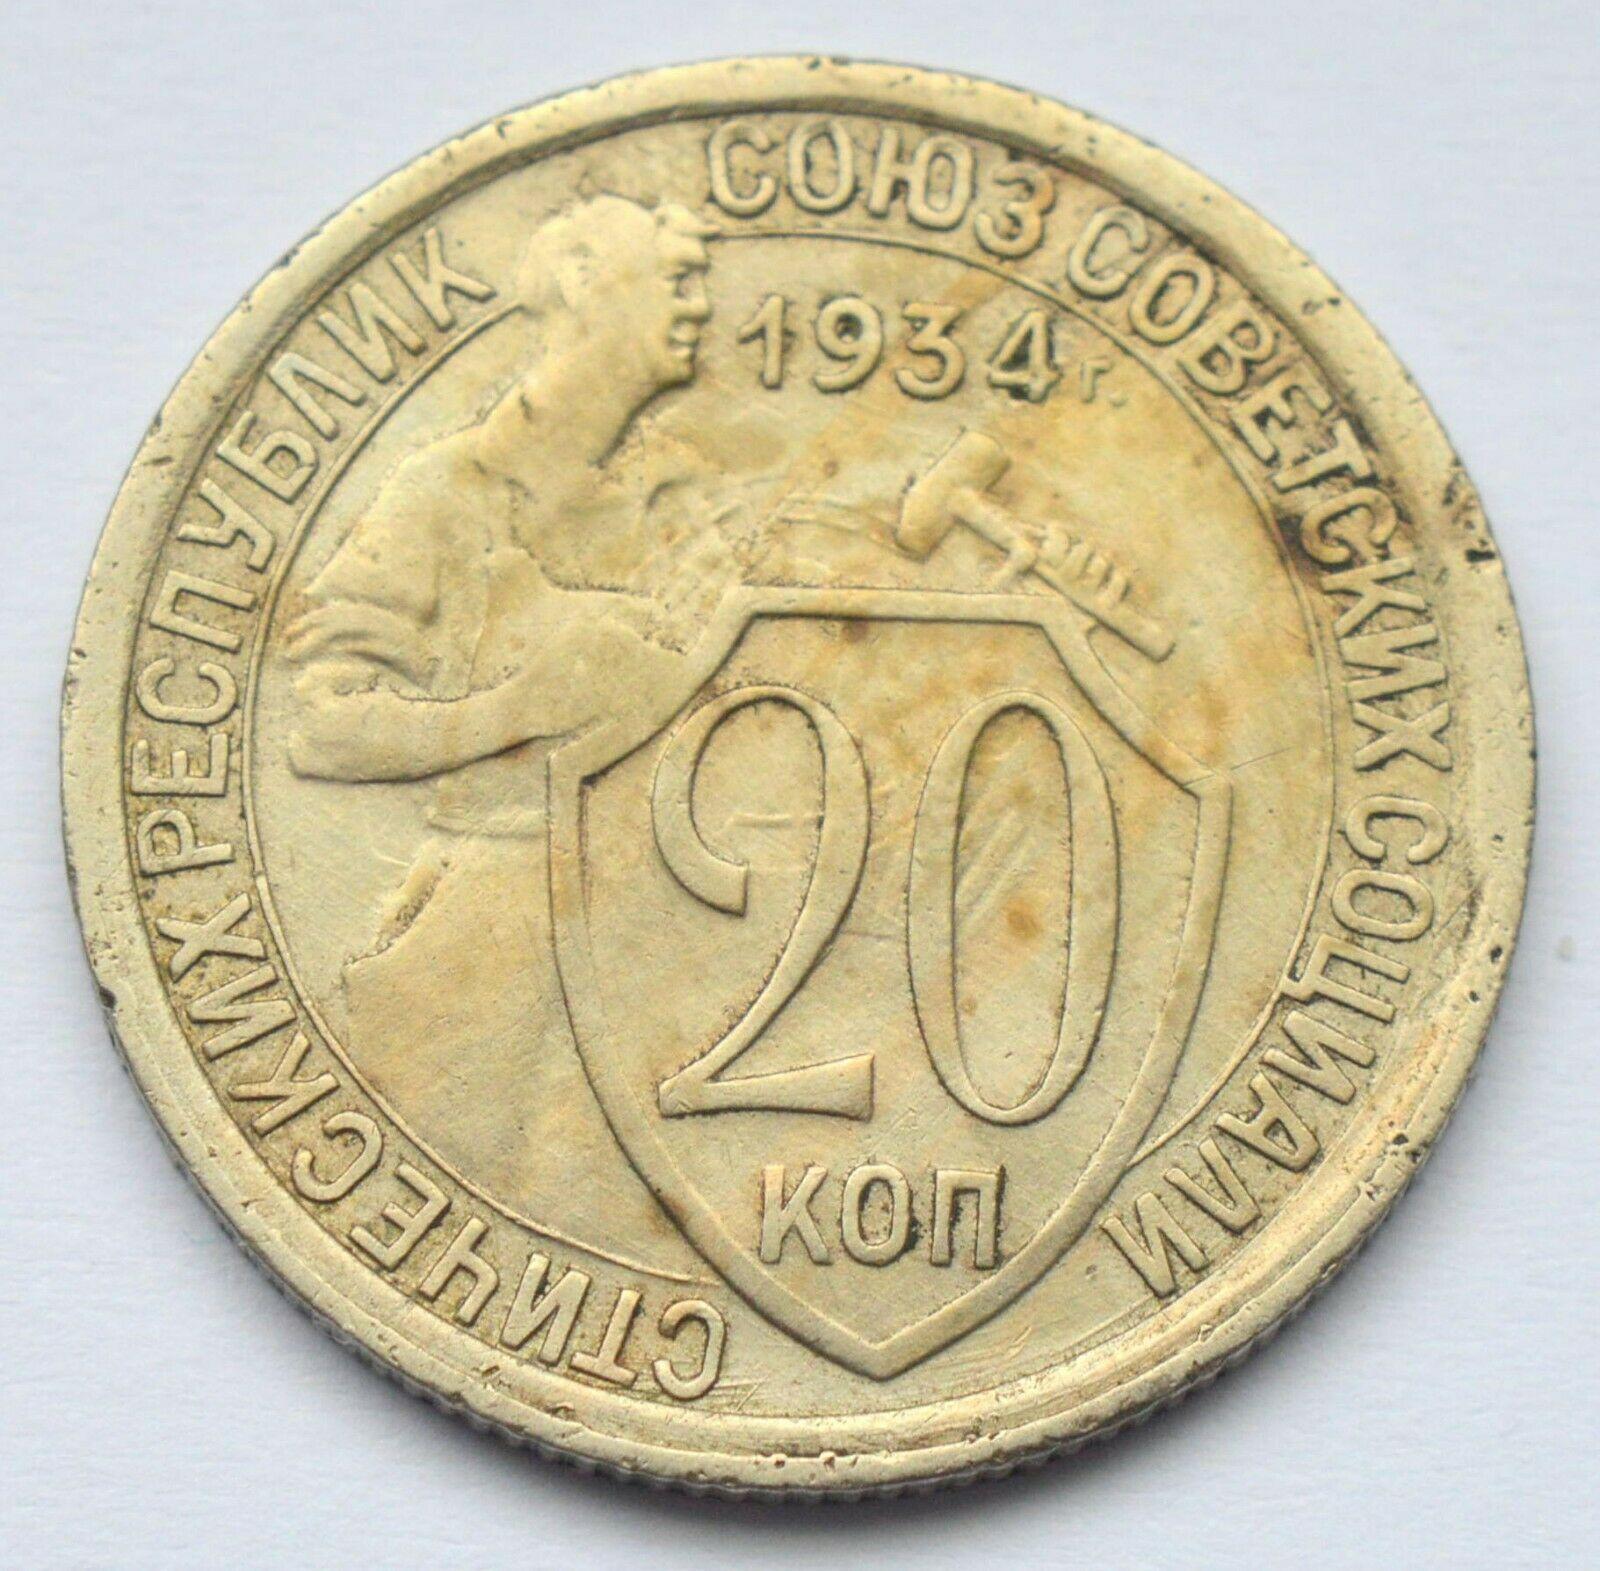 20 коп. 1934 г. Реверс